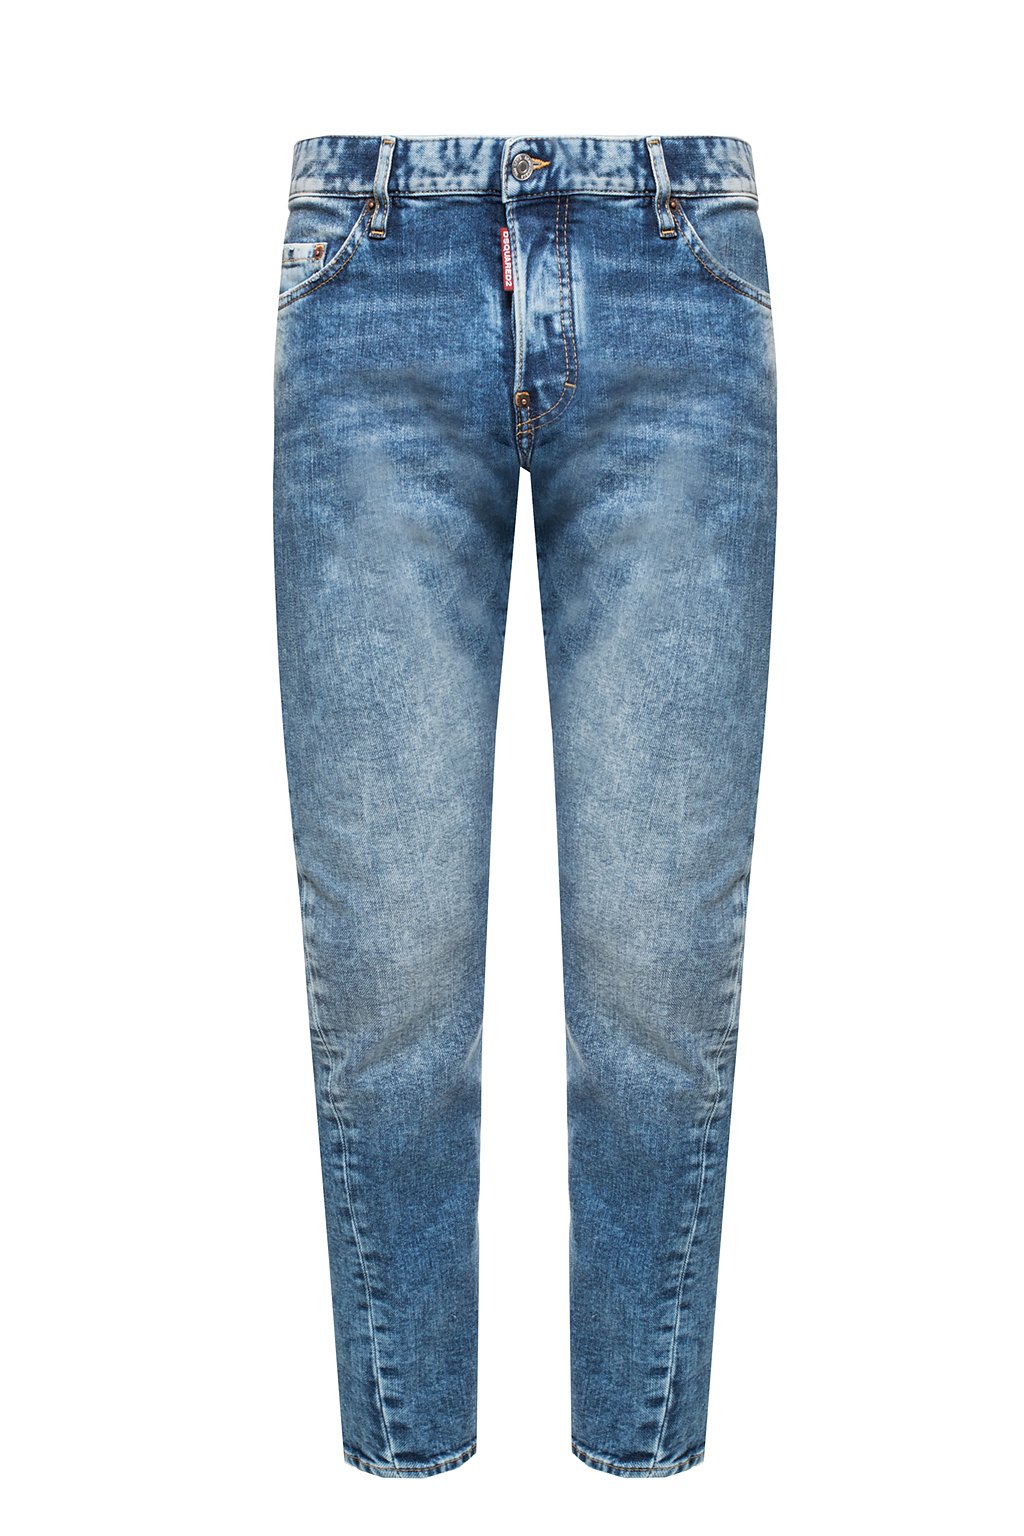 Dsquared2 ‘Sexy Twist Jean’ jeans | Men's Clothing | Vitkac